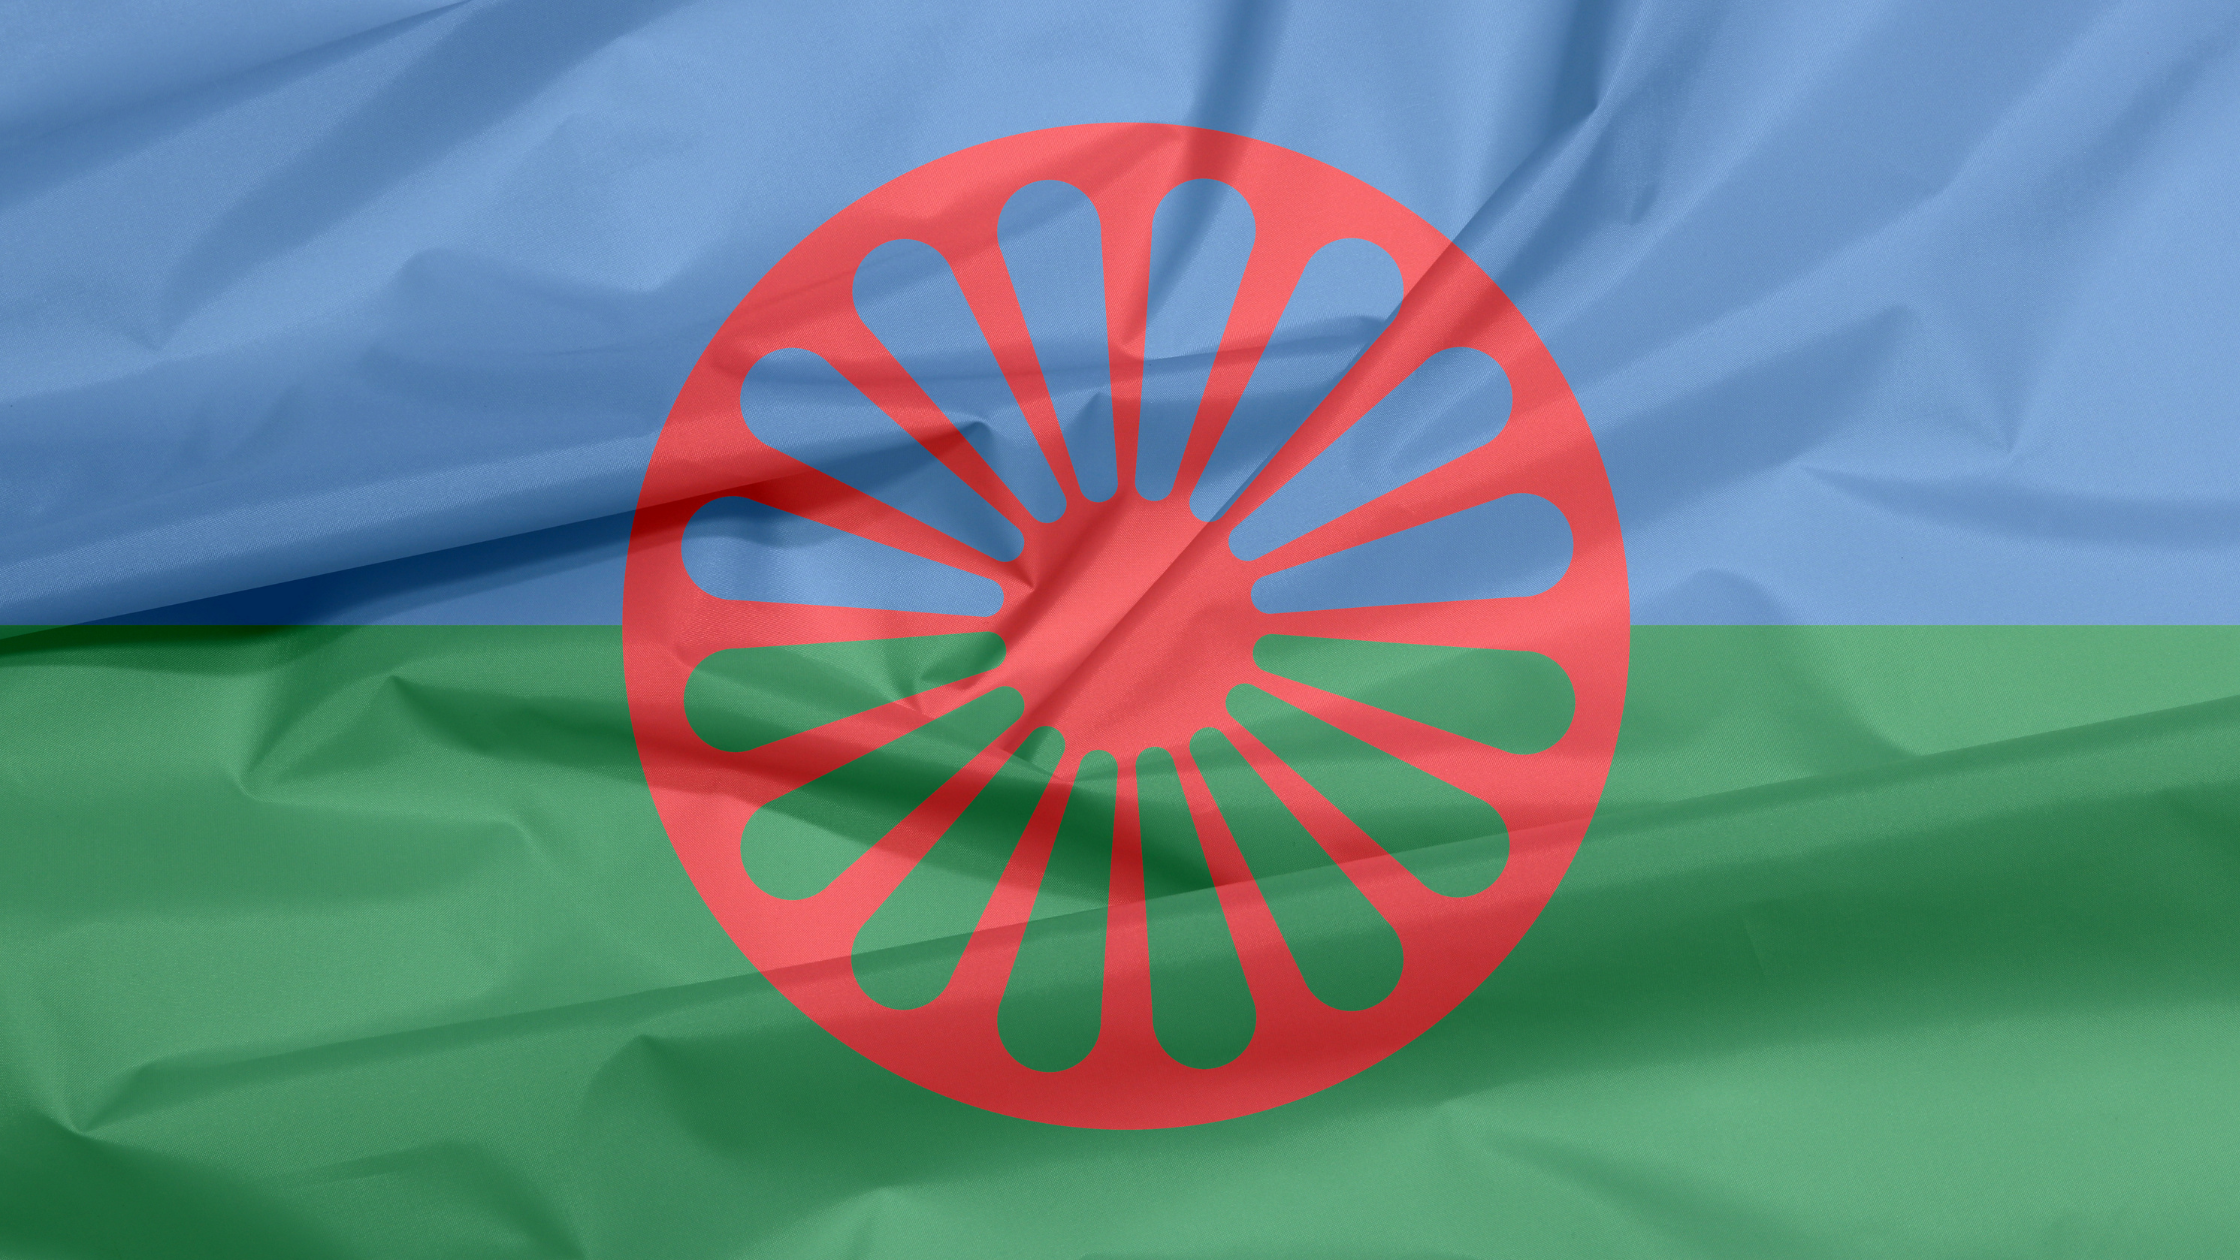 Rad als Symbol für Rom:nja und Sinti:zza